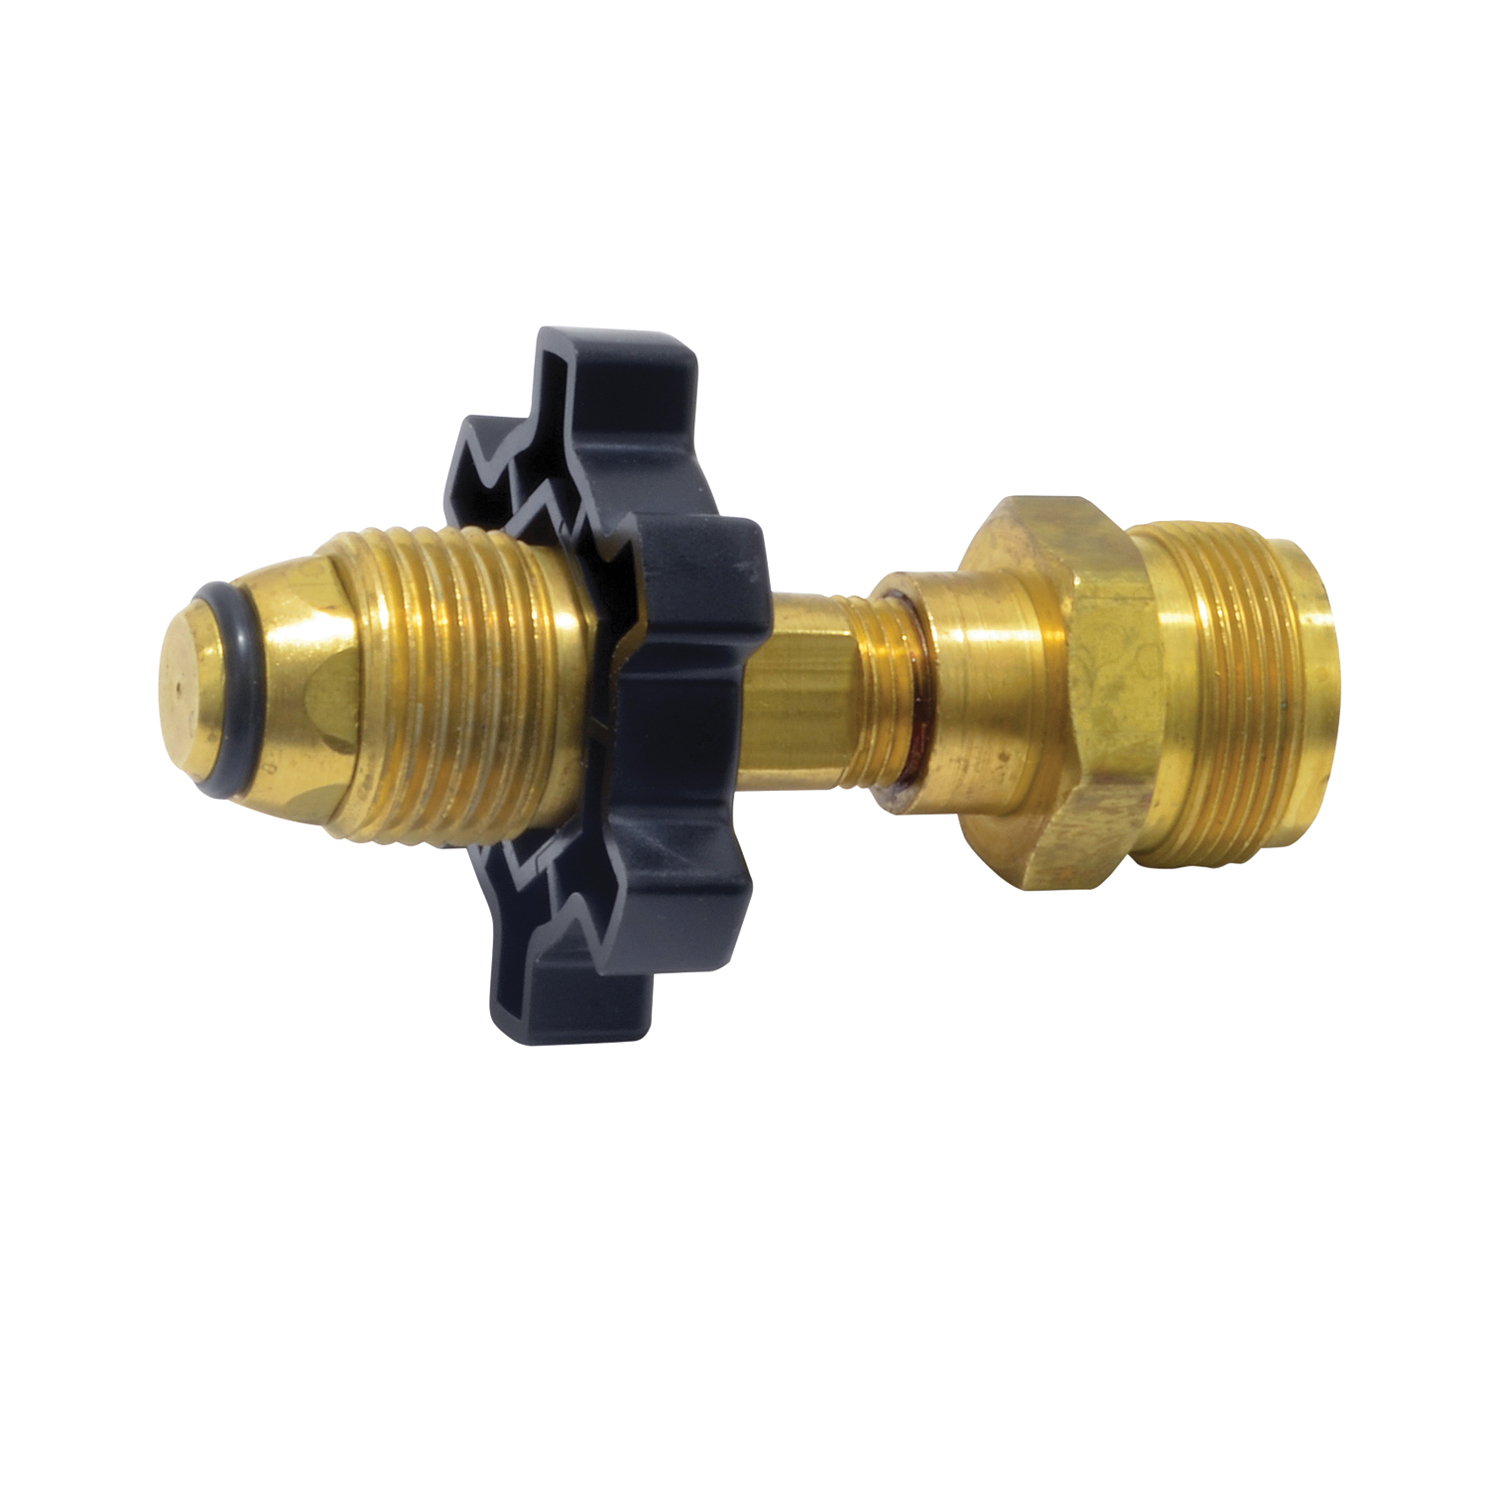 Mr. Heater F273758 Cylinder Adapter, Brass, Gold - 1